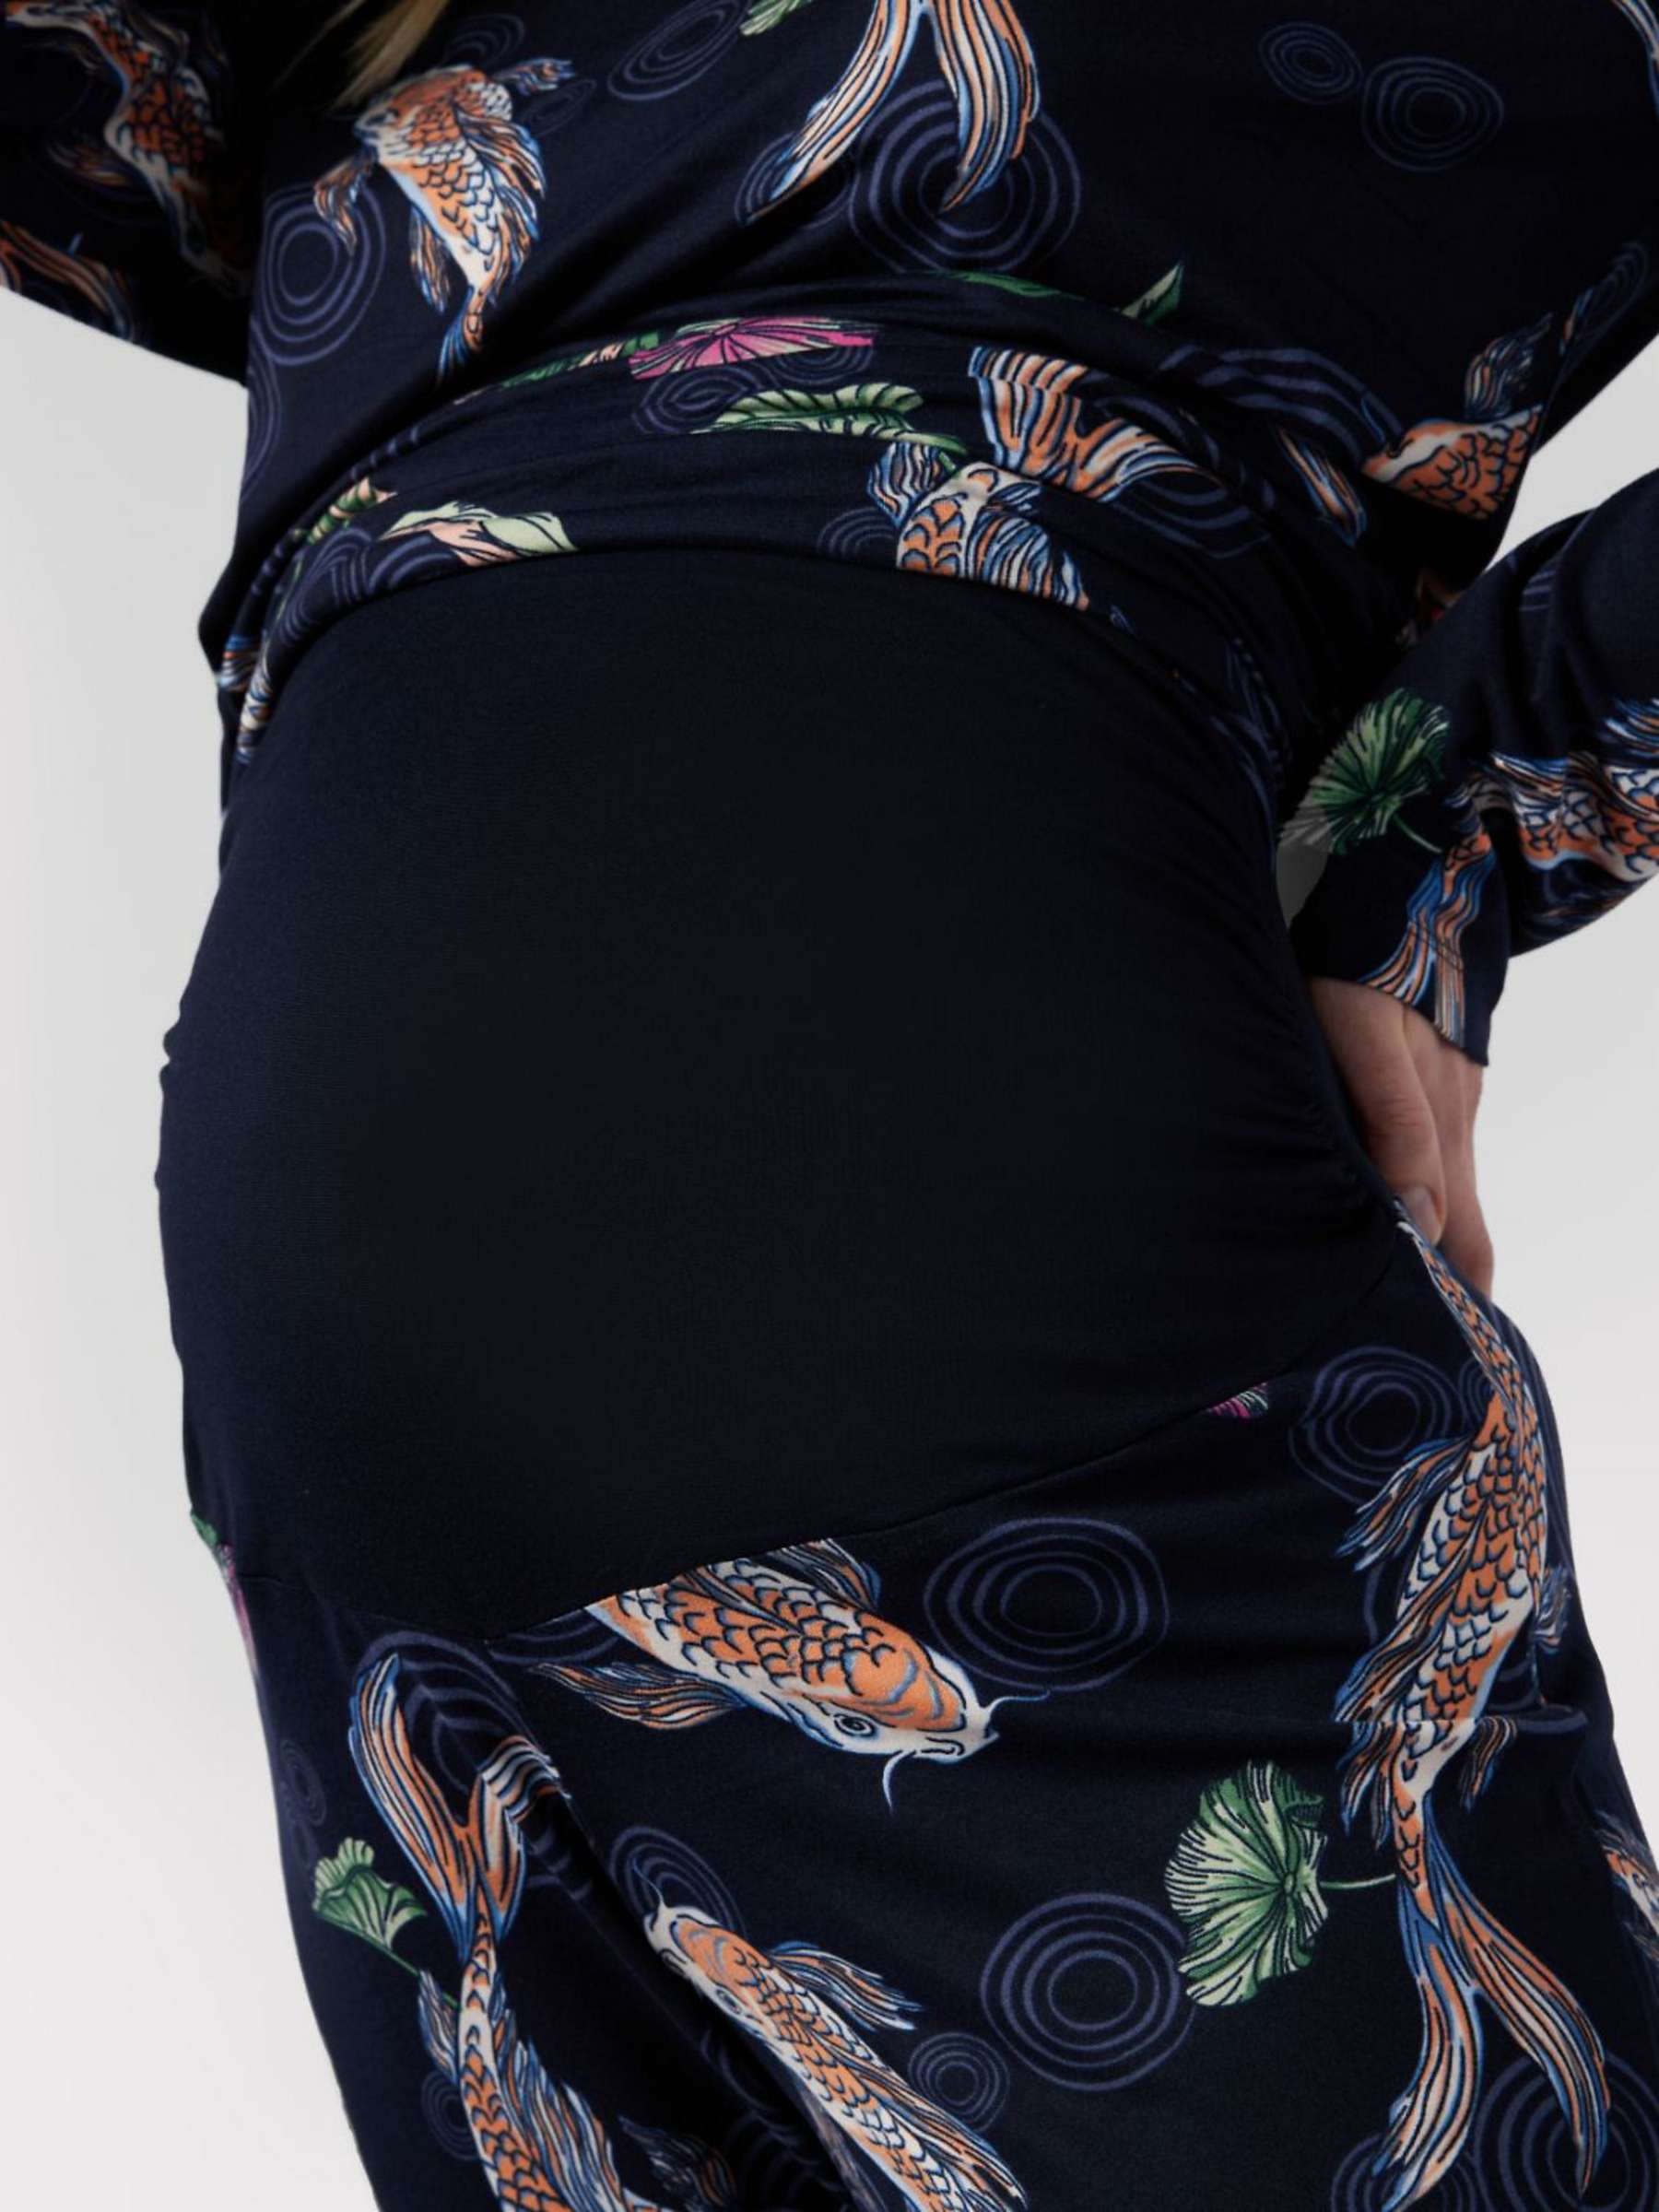 Buy Chelsea Peers Maternity Koi Fish Print Pyjama Set, Navy Online at johnlewis.com